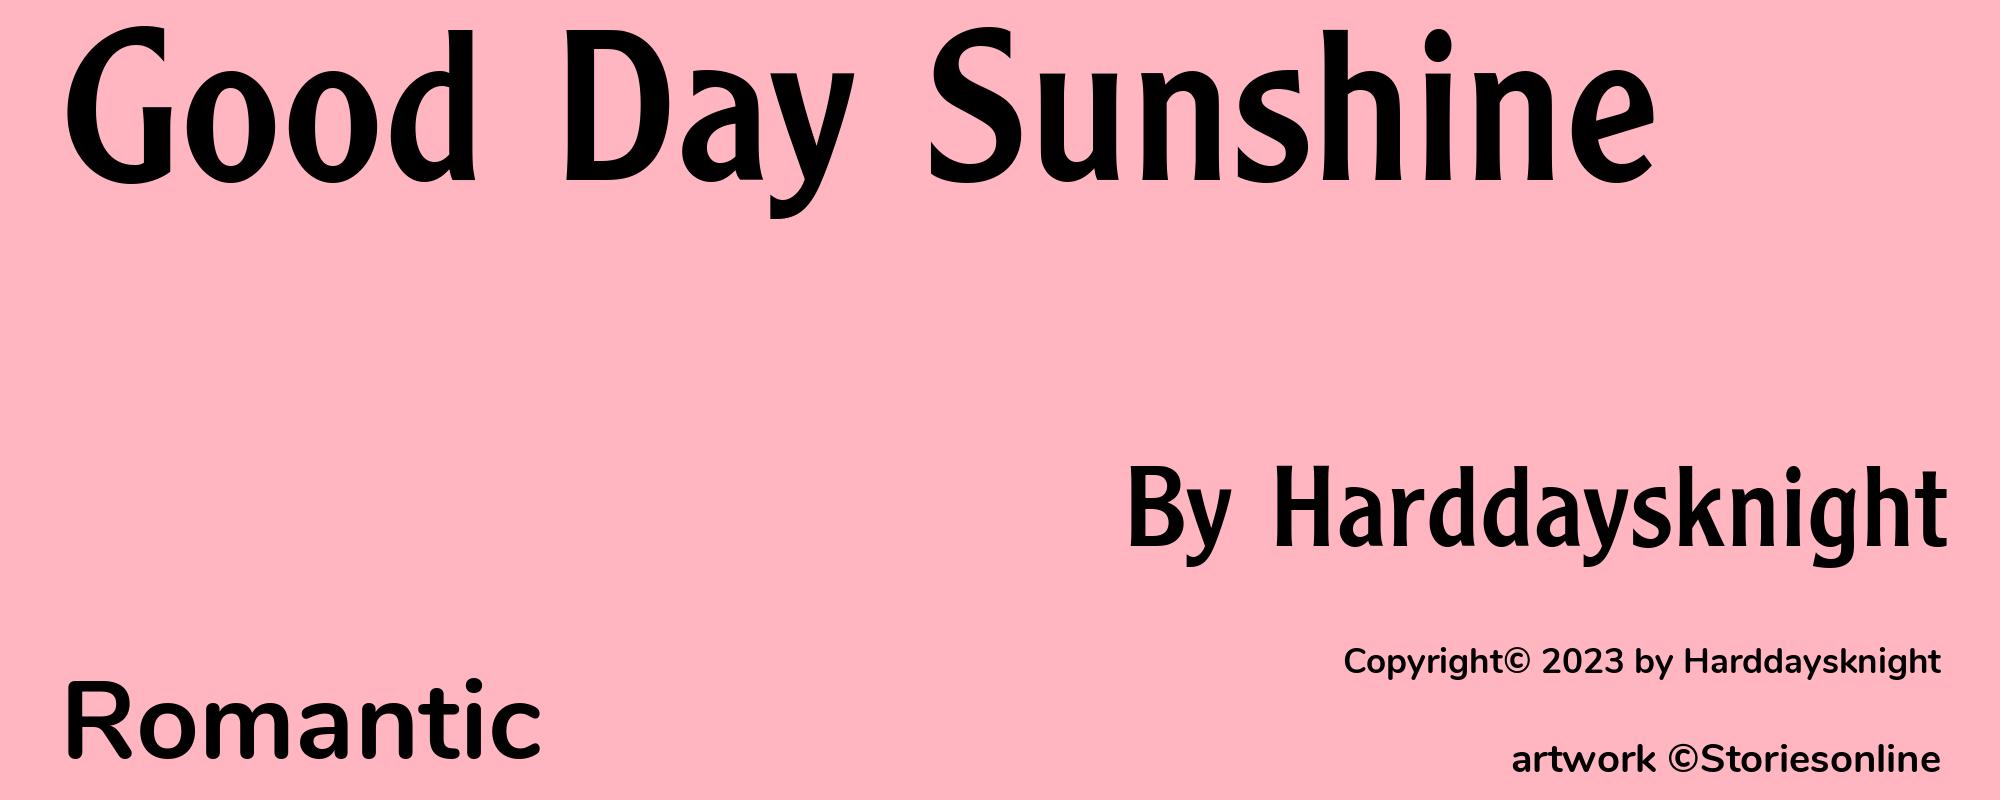 Good Day Sunshine - Cover